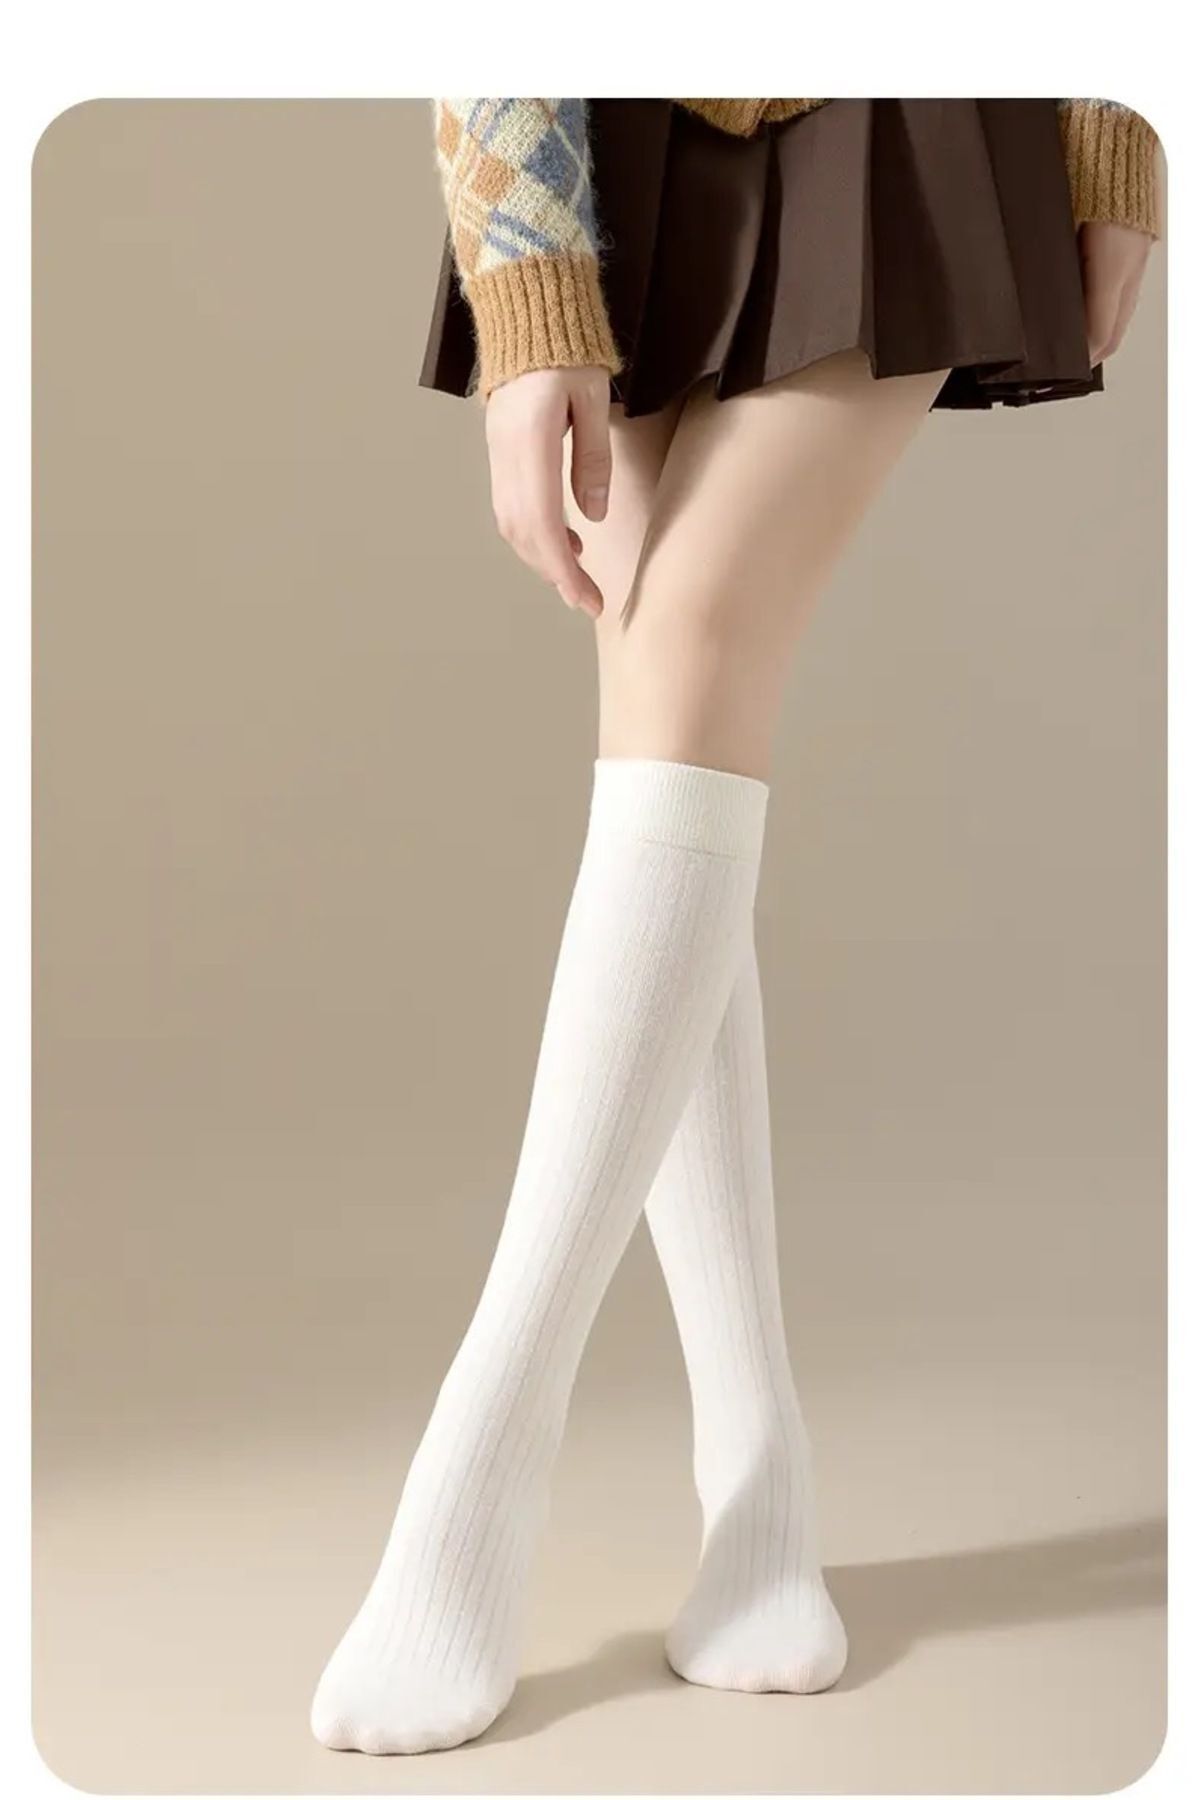 izaycollection 4 Çift Beyaz Bambu Pamuklu Kadın Çorap Burun Topuk Dikişsizdir